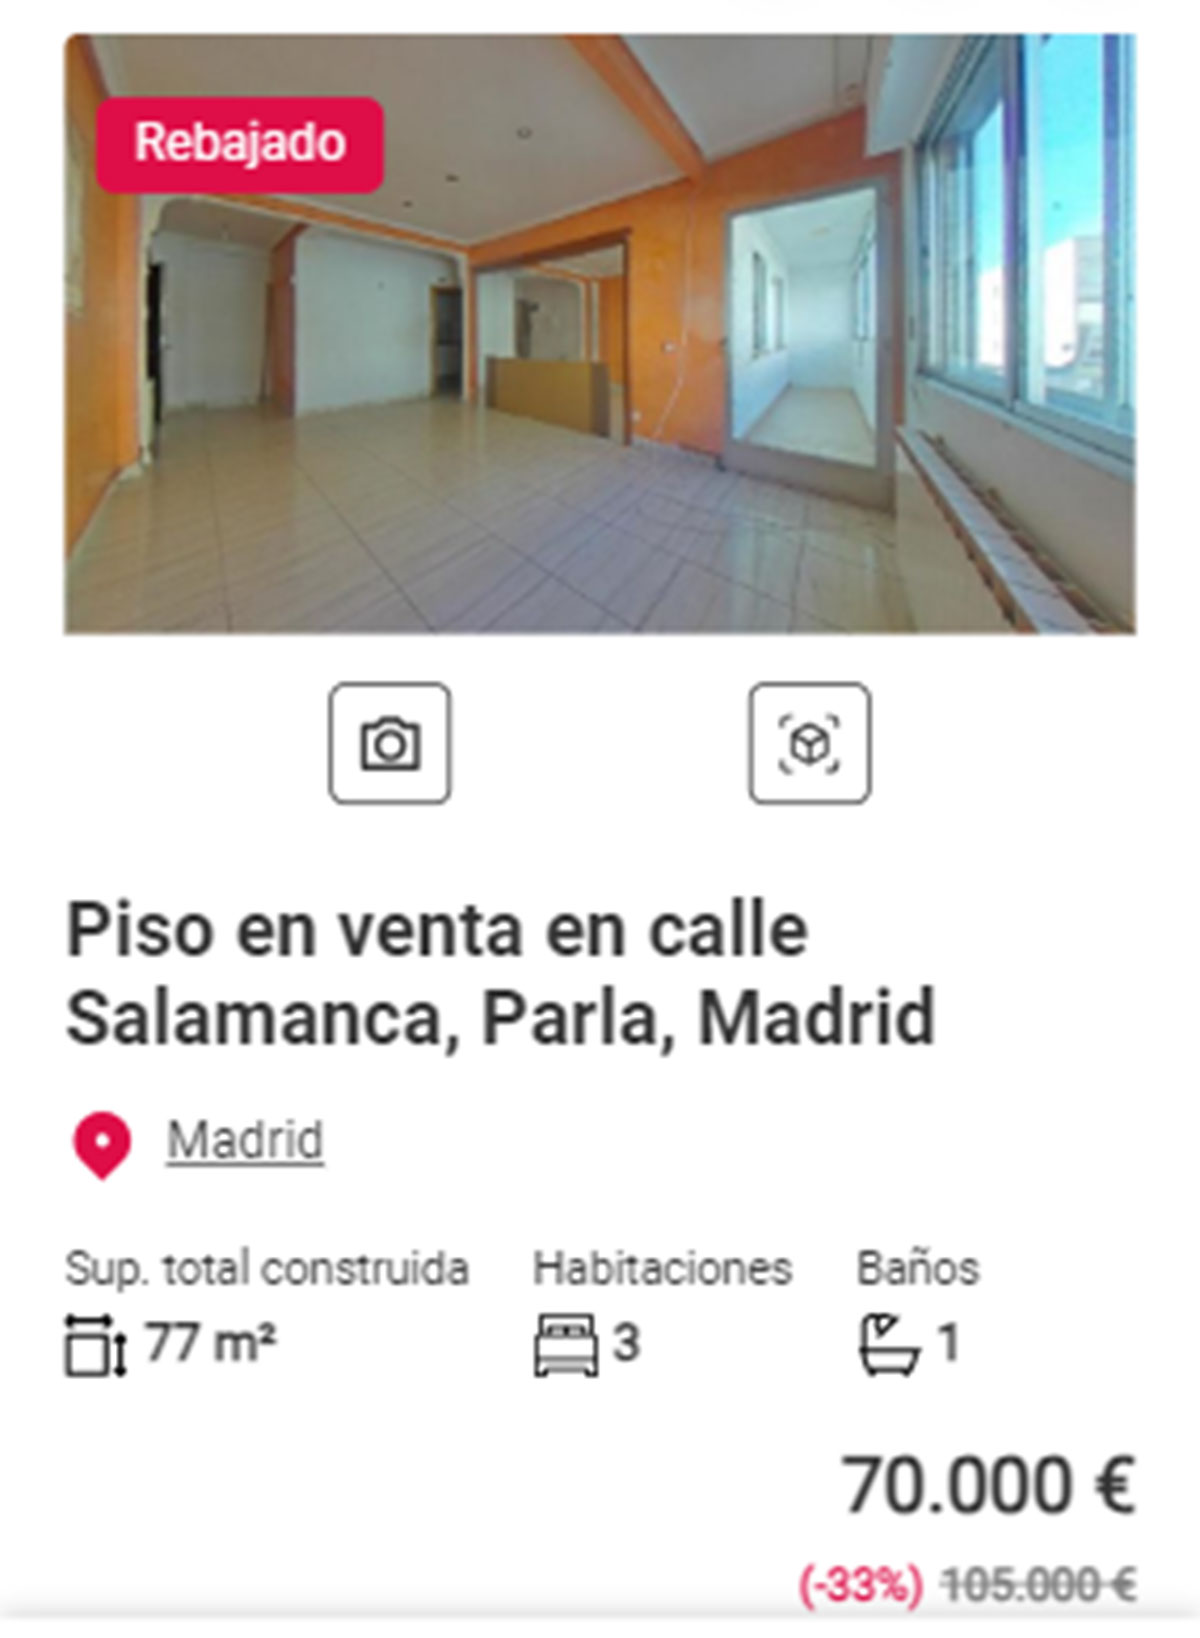 Piso con descuento en Madrid por 70.000 euros